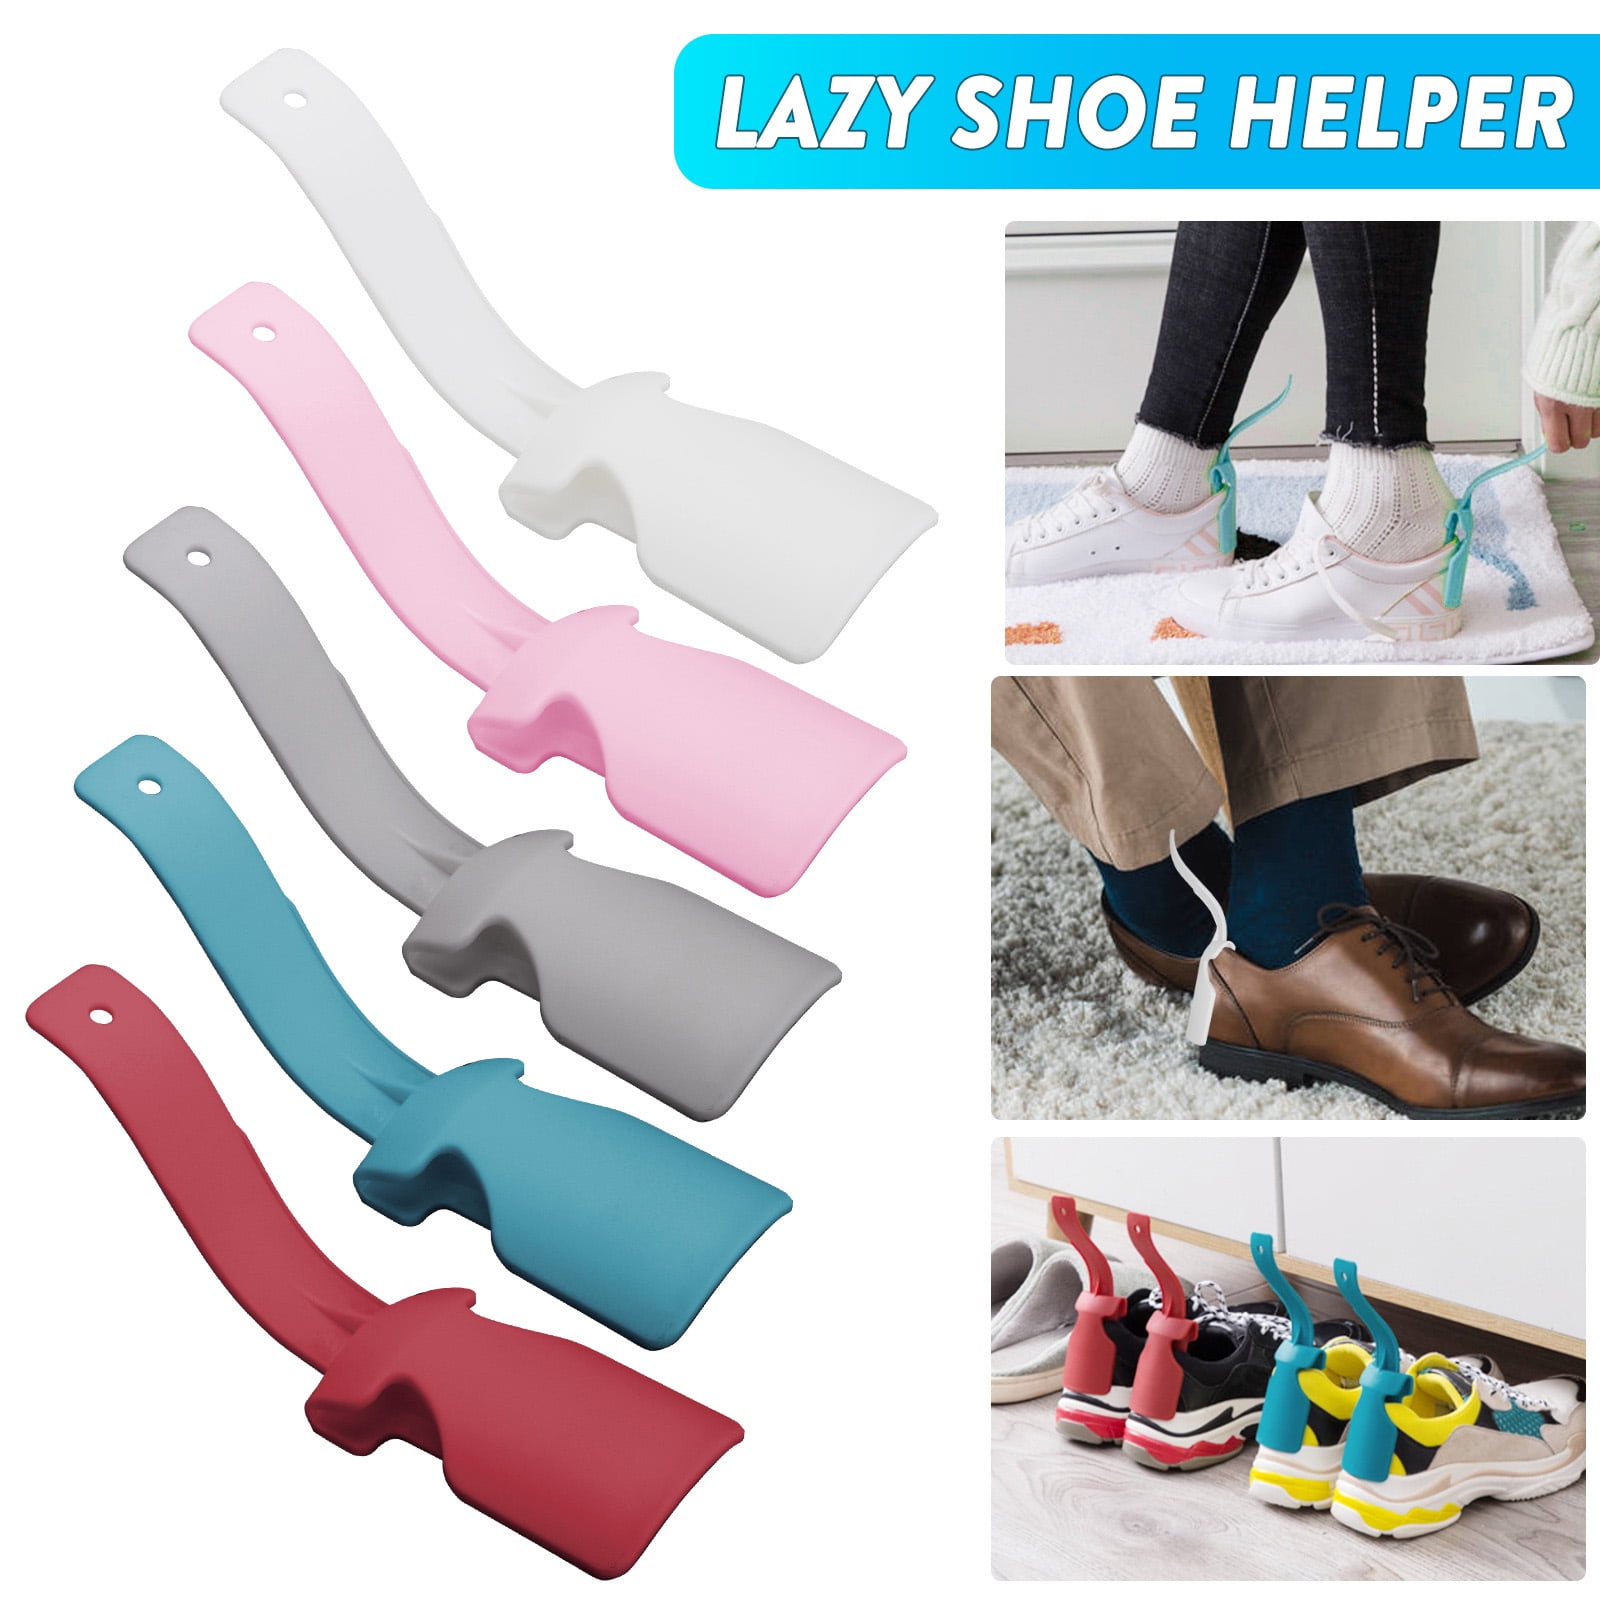 Fanville Lazy Shoe Helper Unisexe Handled Shoe Horn Wear Shoe Helpers Unisex Shoe Horners Easy on and Off Shoe Lifting Helpers 